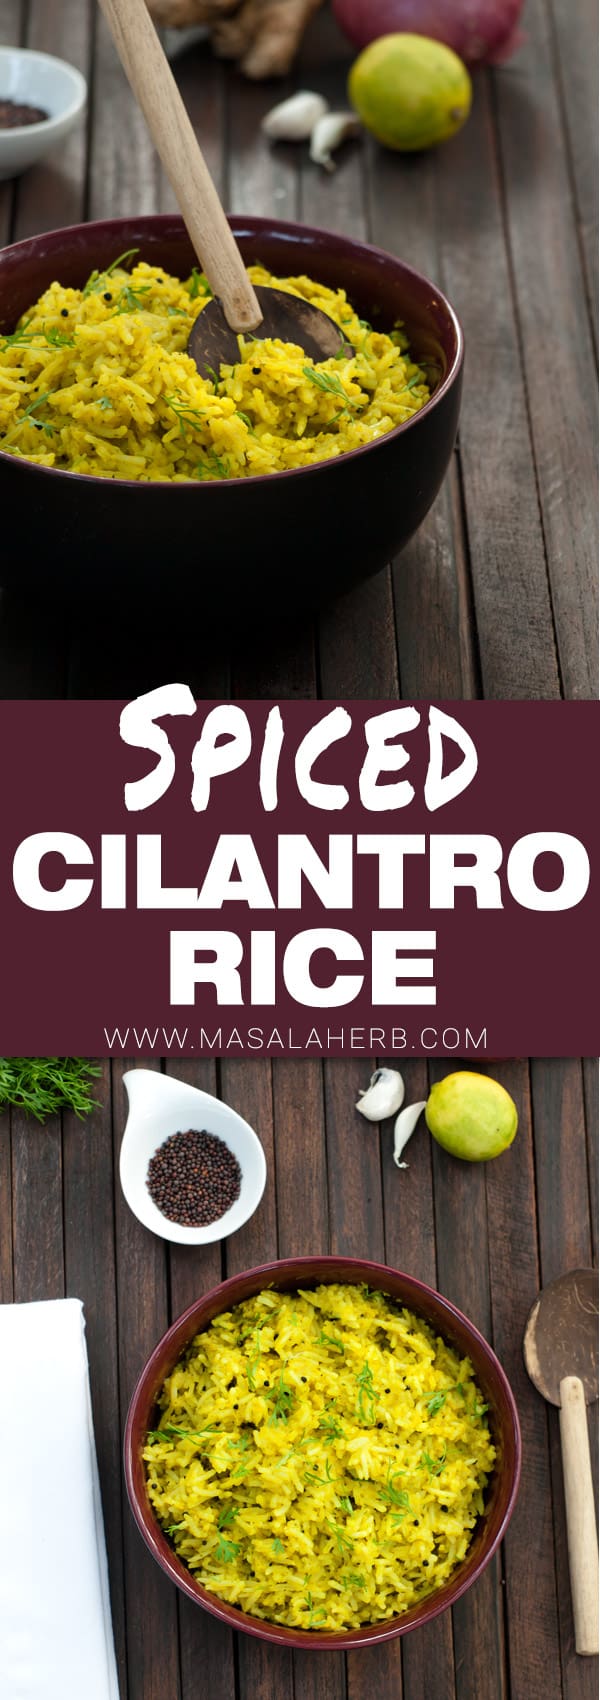 Coriander Rice Recipe - How to make Coriander Rice - Cilantro Rice www.MasalaHerb.com #sidedish #rice #masalaherb